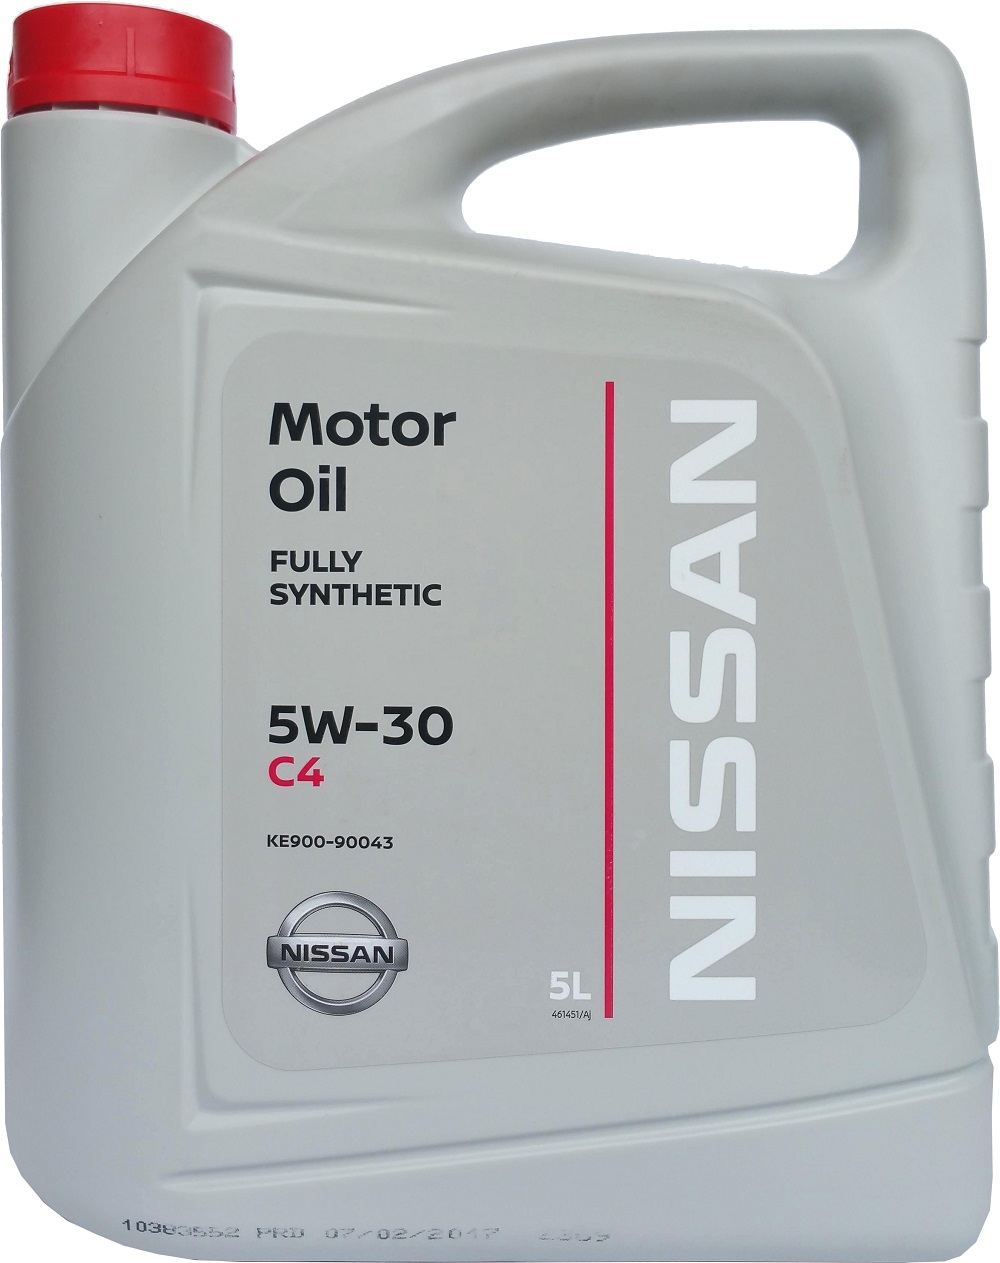 Nissan Engine oil Nissan Motor Oil FS 5W-30, 5L – price